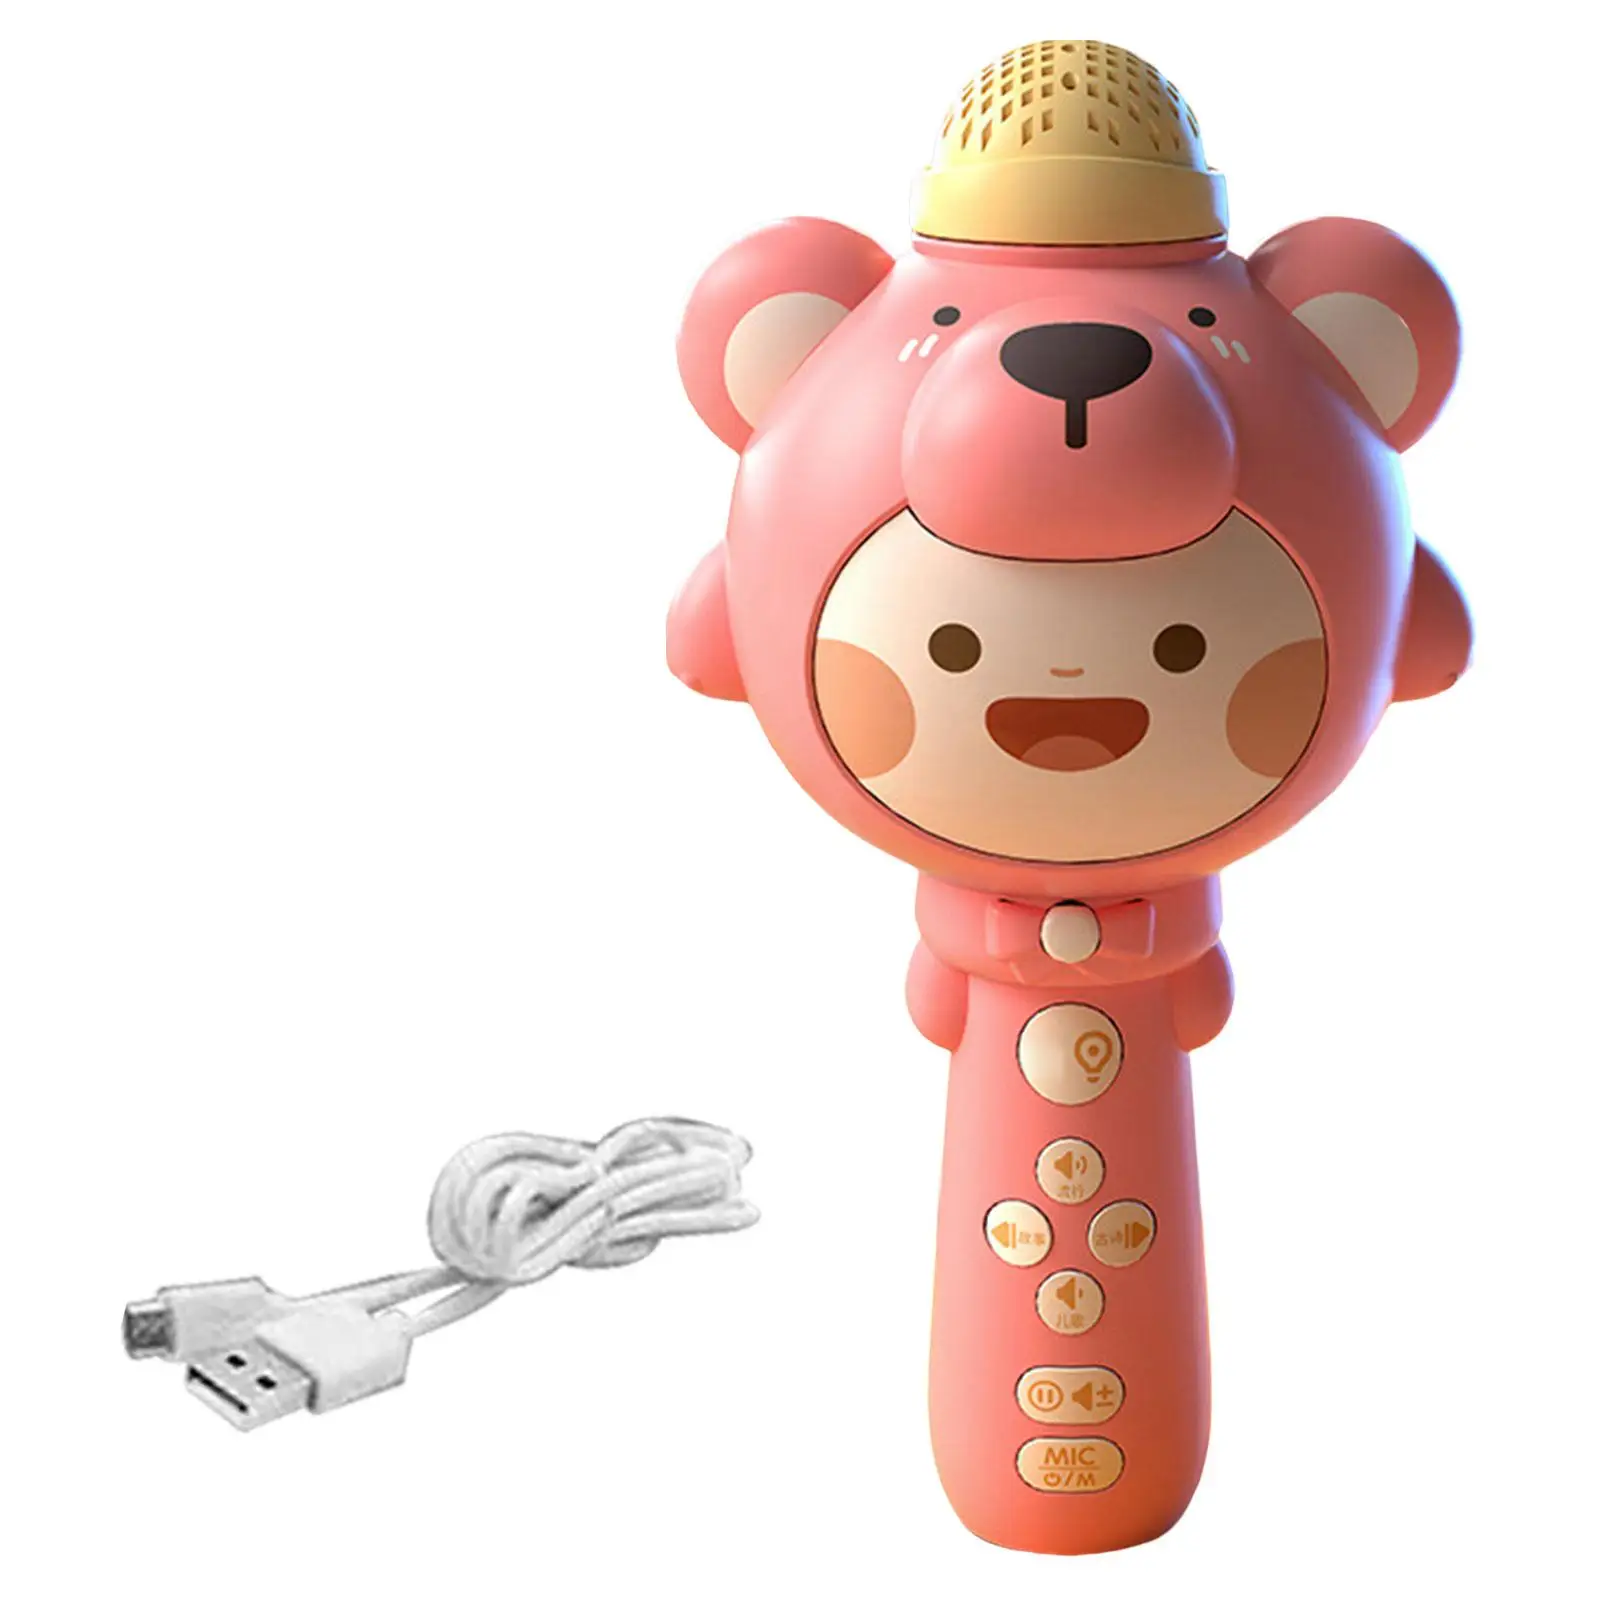 Handheld Mic Speaker Machine with LED Lights Dancing LED Karaoke Mic Speaker Singing Microphone for Party Home Birthday KTV